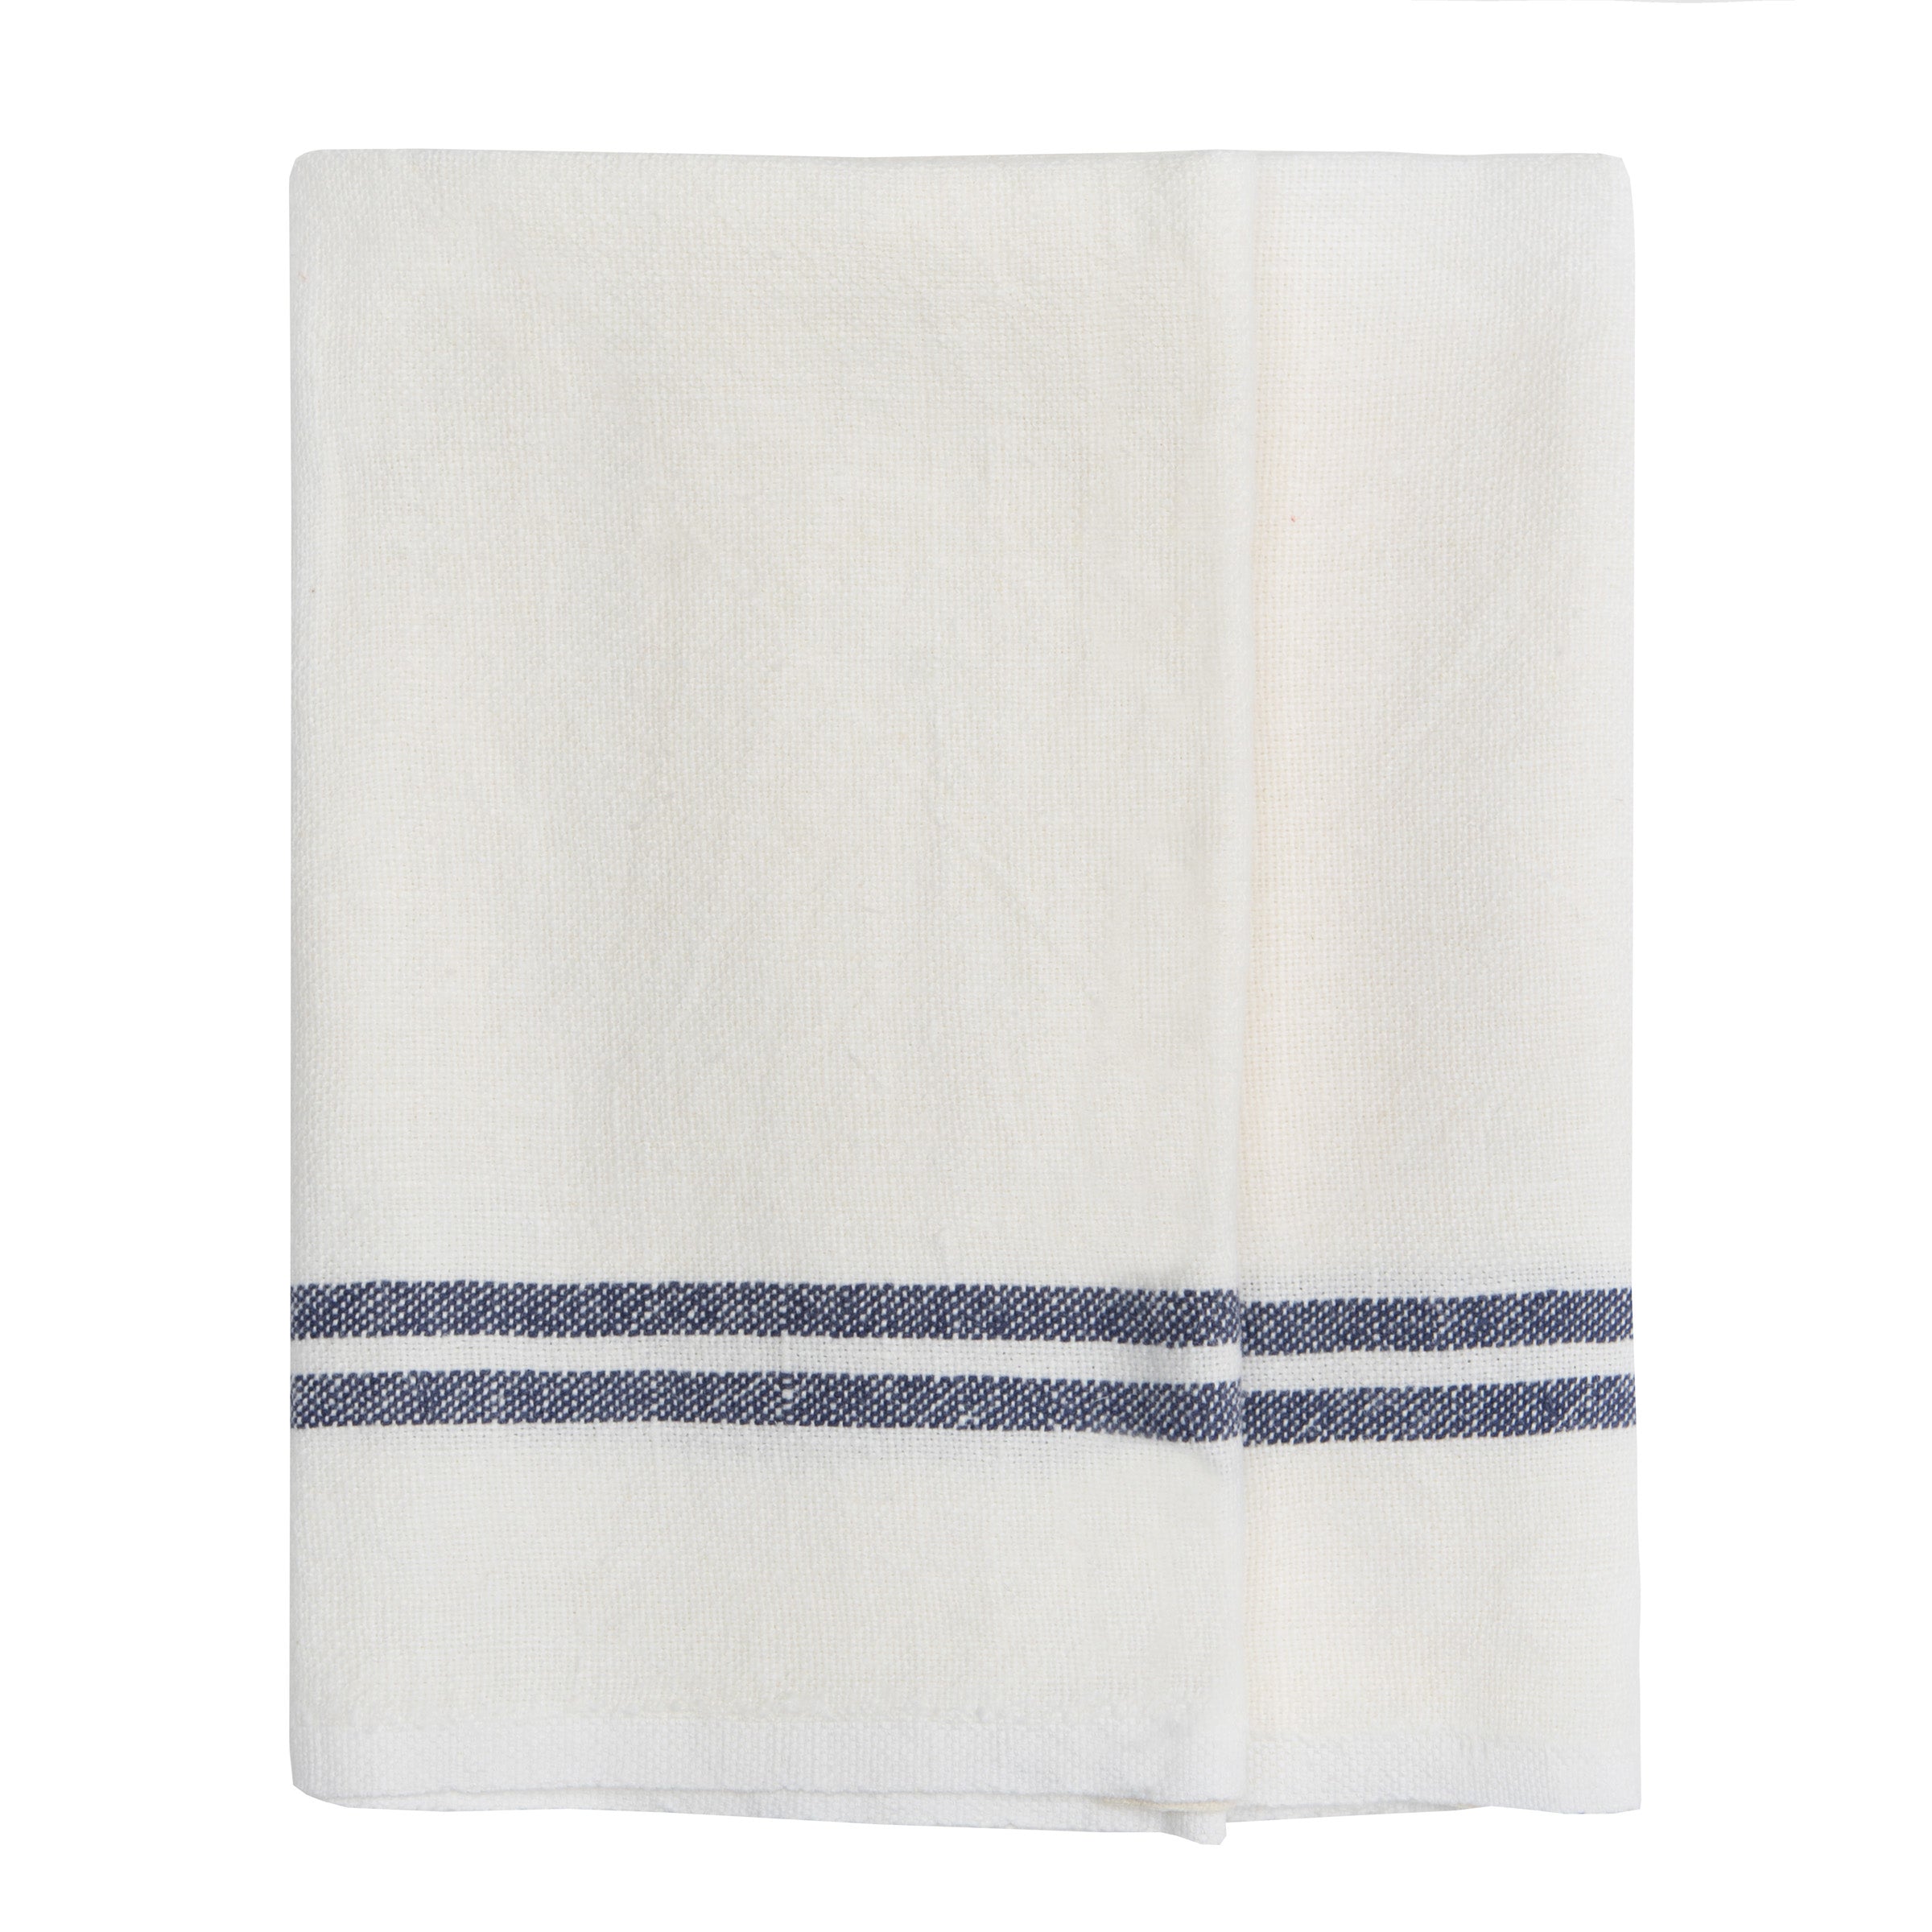 Japanese Linen Kitchen Towel, grey thin white stripe